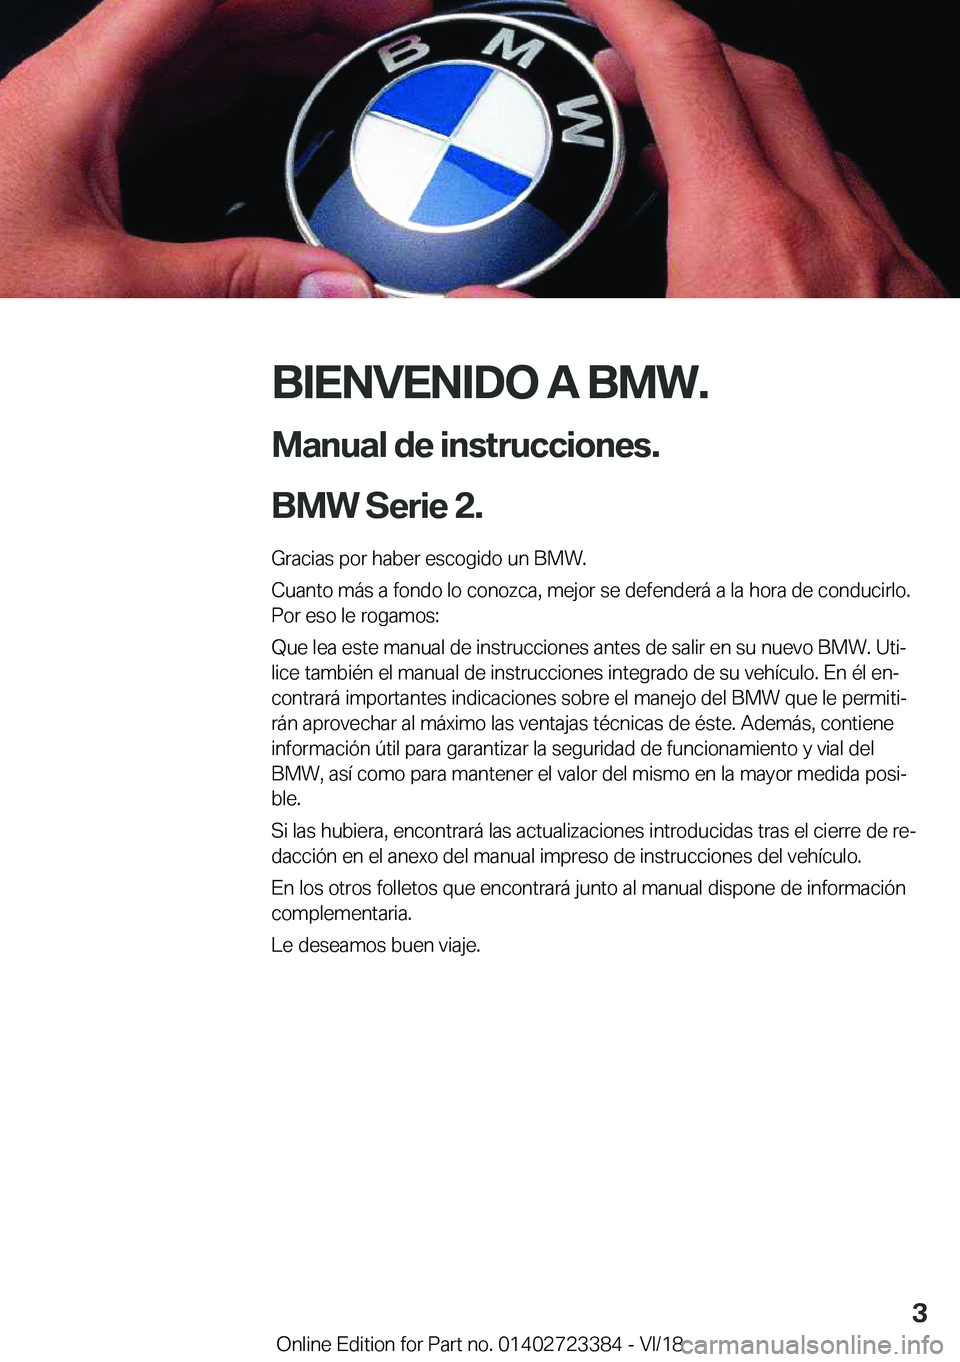 BMW 2 SERIES COUPE 2019  Manuales de Empleo (in Spanish) �B�I�E�N�V�E�N�I�D�O��A��B�M�W�.
�M�a�n�u�a�l��d�e��i�n�s�t�r�u�c�c�i�o�n�e�s�.
�B�M�W��S�e�r�i�e��2�.� �G�r�a�c�i�a�s��p�o�r��h�a�b�e�r��e�s�c�o�g�i�d�o��u�n��B�M�W�.
�C�u�a�n�t�o��m�